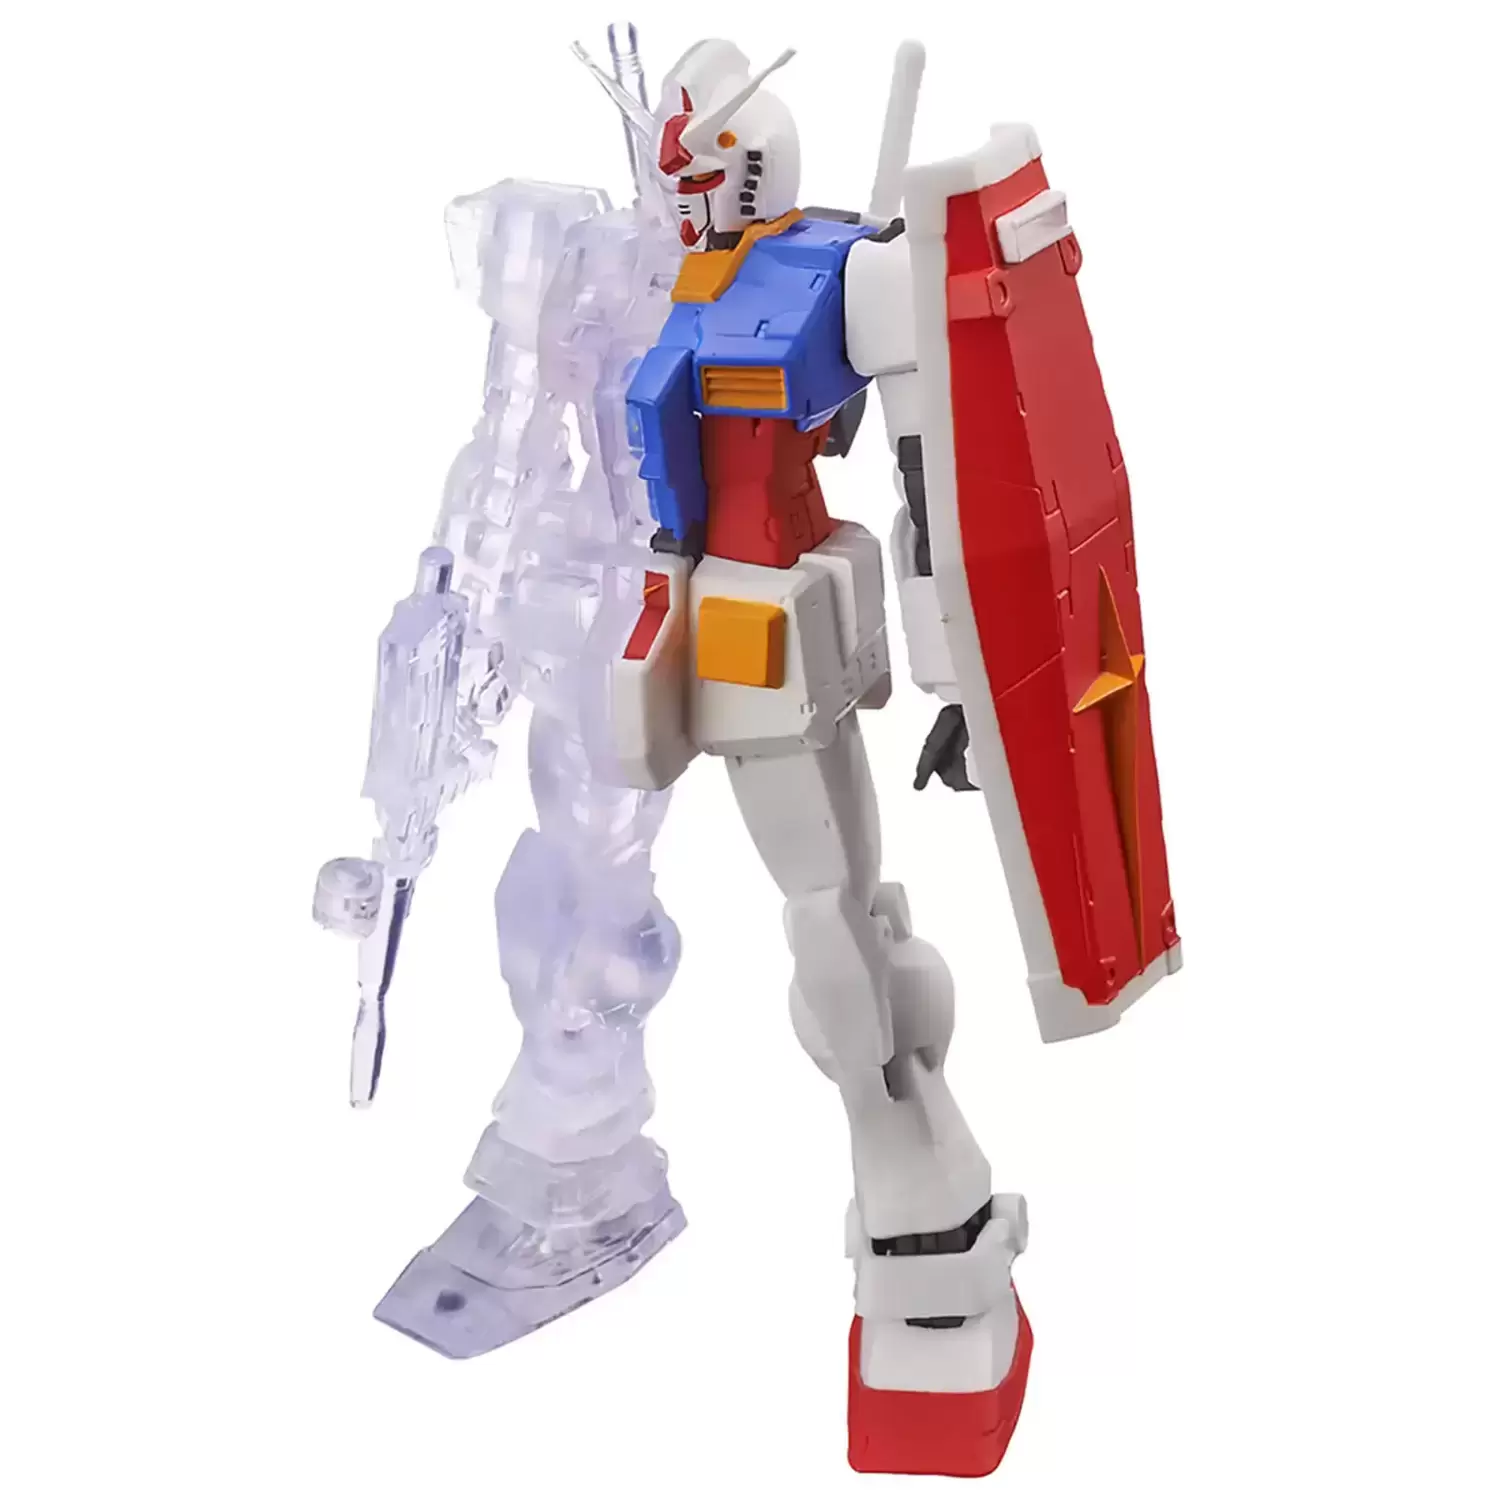 Banpresto Statues - Mobile Suit Gundam Internal Structure RX-78-2 Gundam Weapon Ver. (Ver. A)